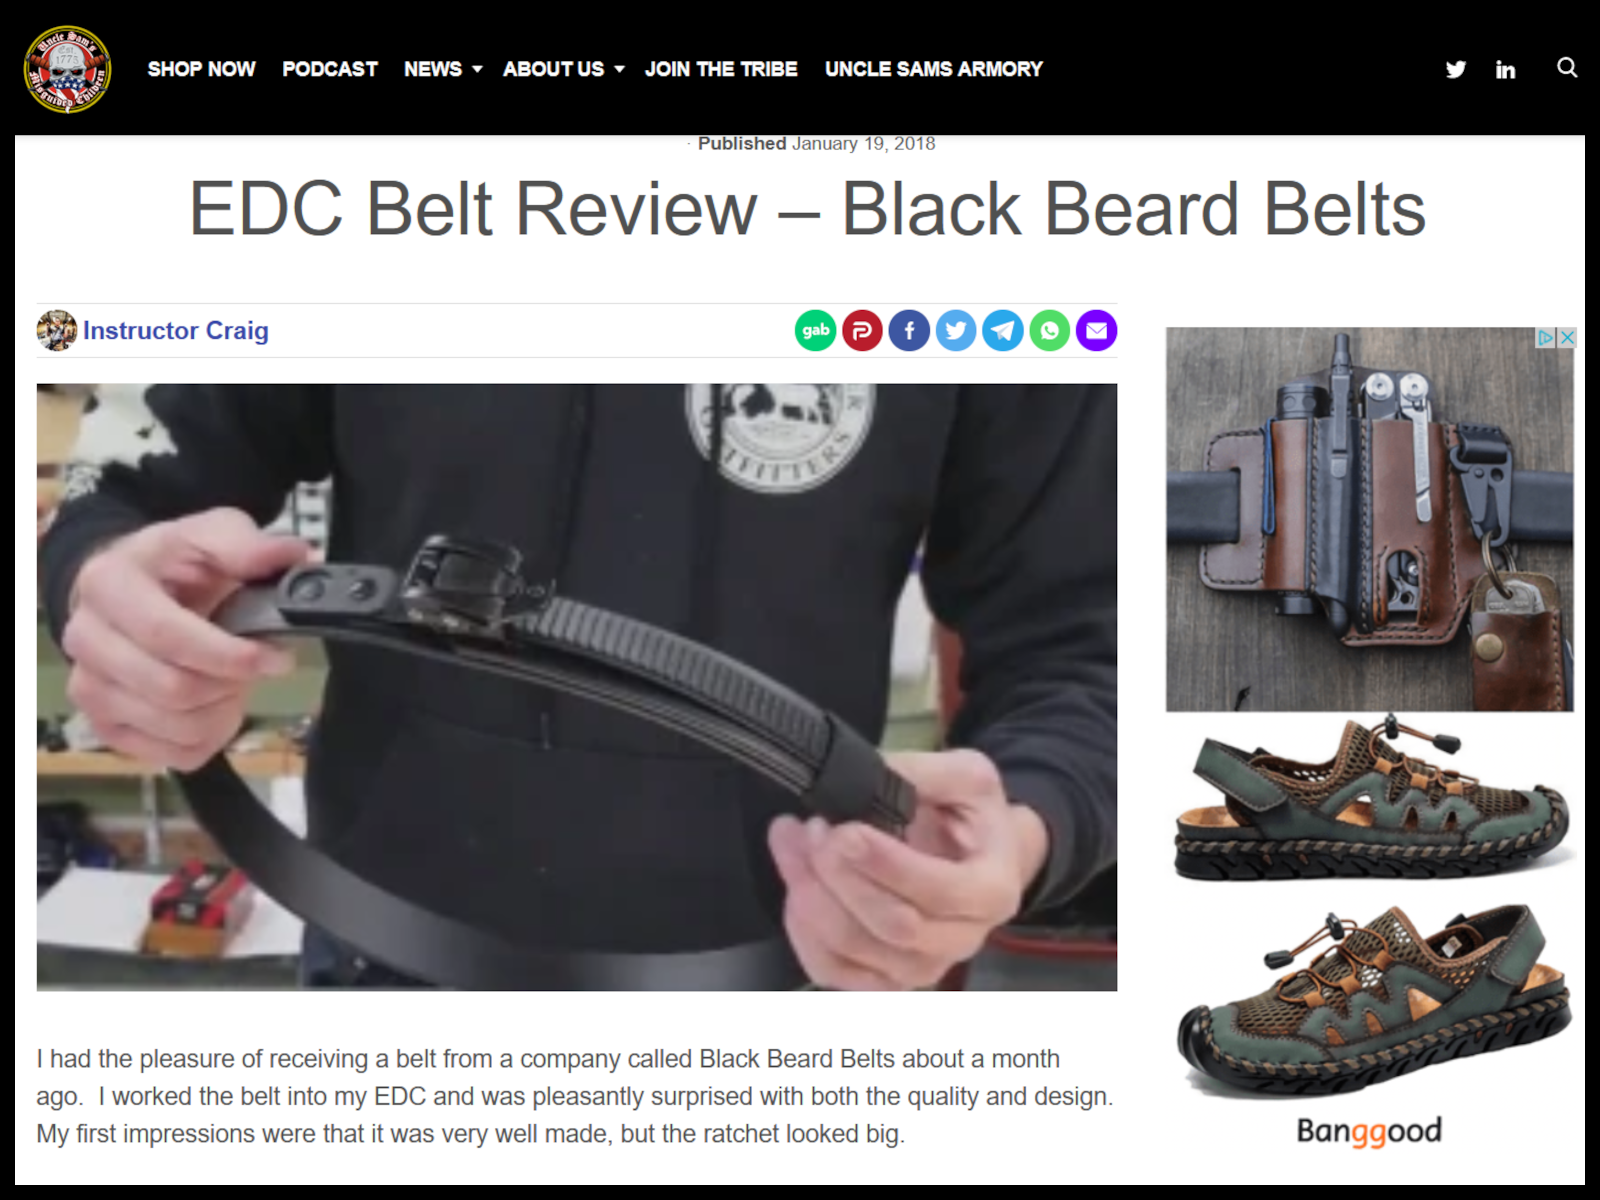 EDC BELT REVIEW – BLACK BEARD BELTS by Instructor Craig